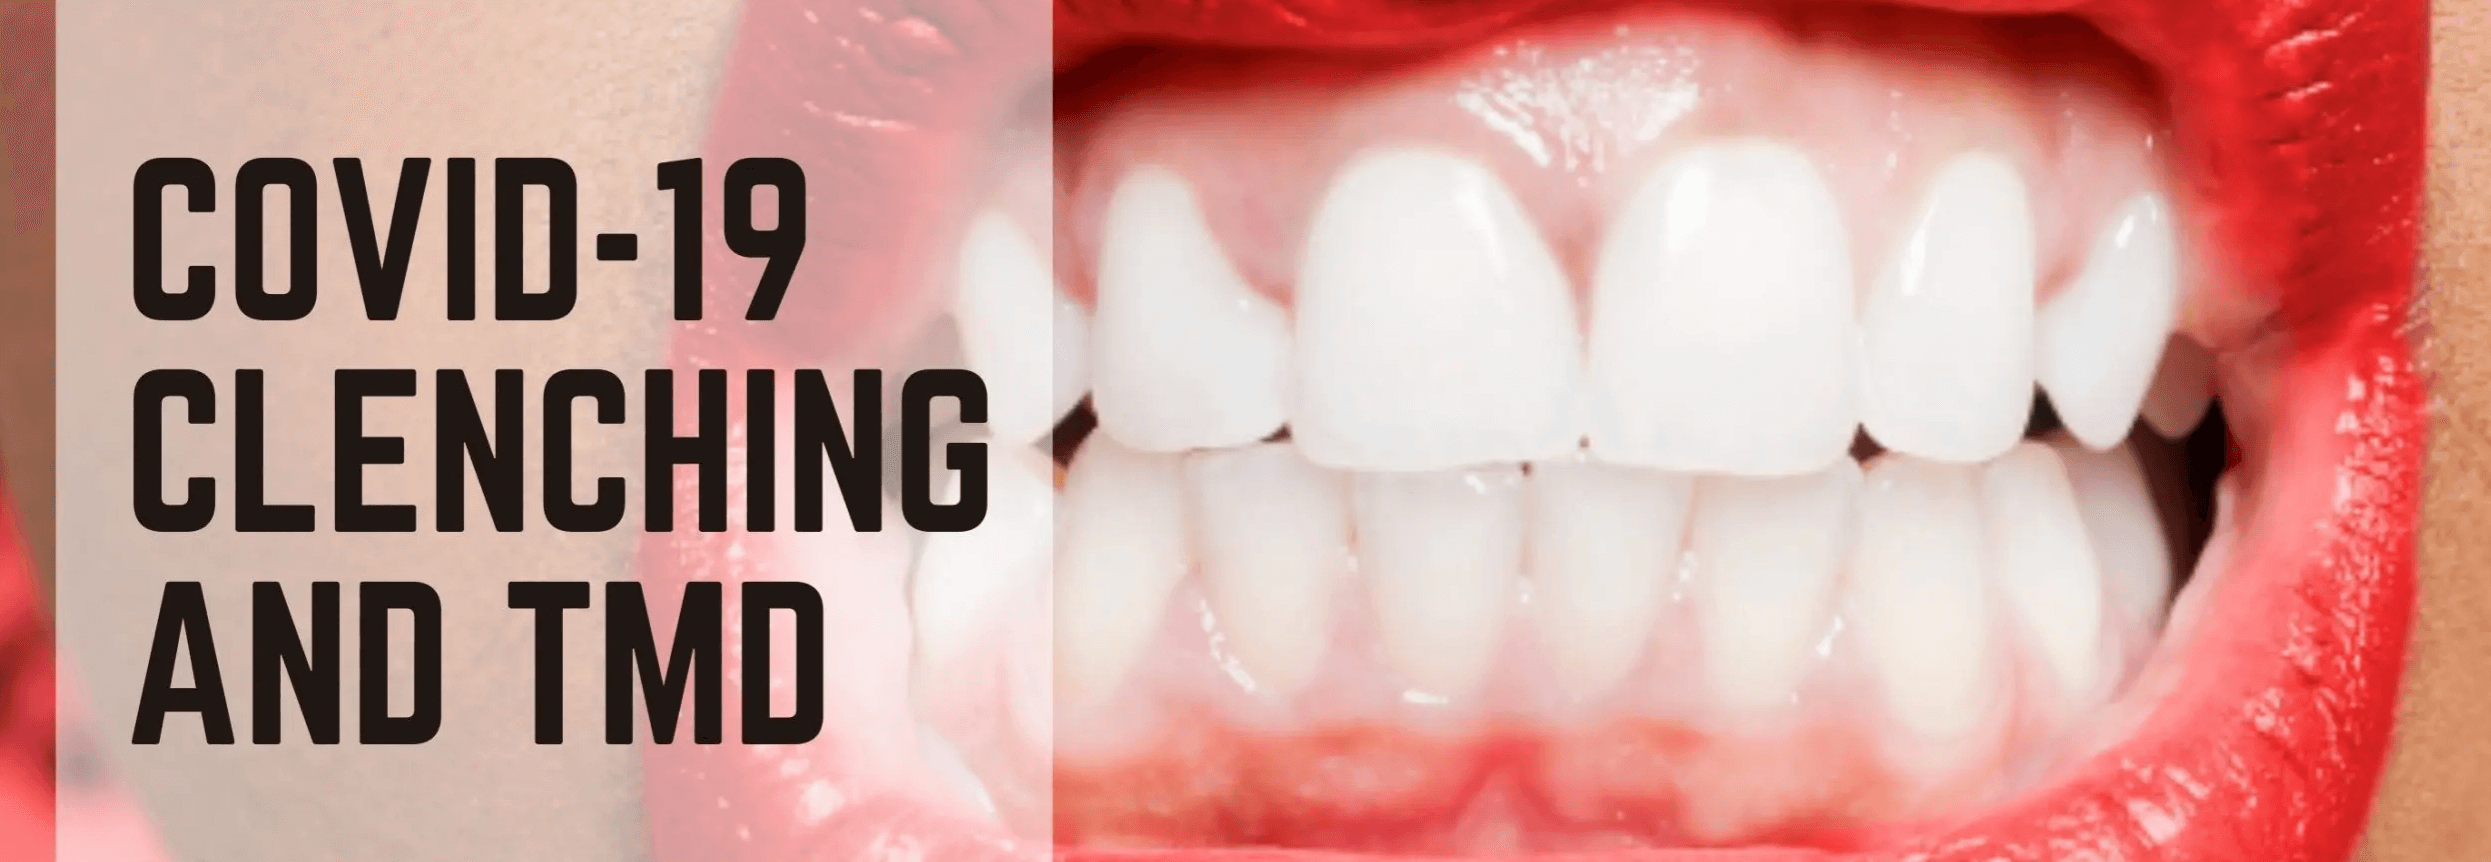 Teeth Grinding & COVID-19: The Increase in Teeth Damage